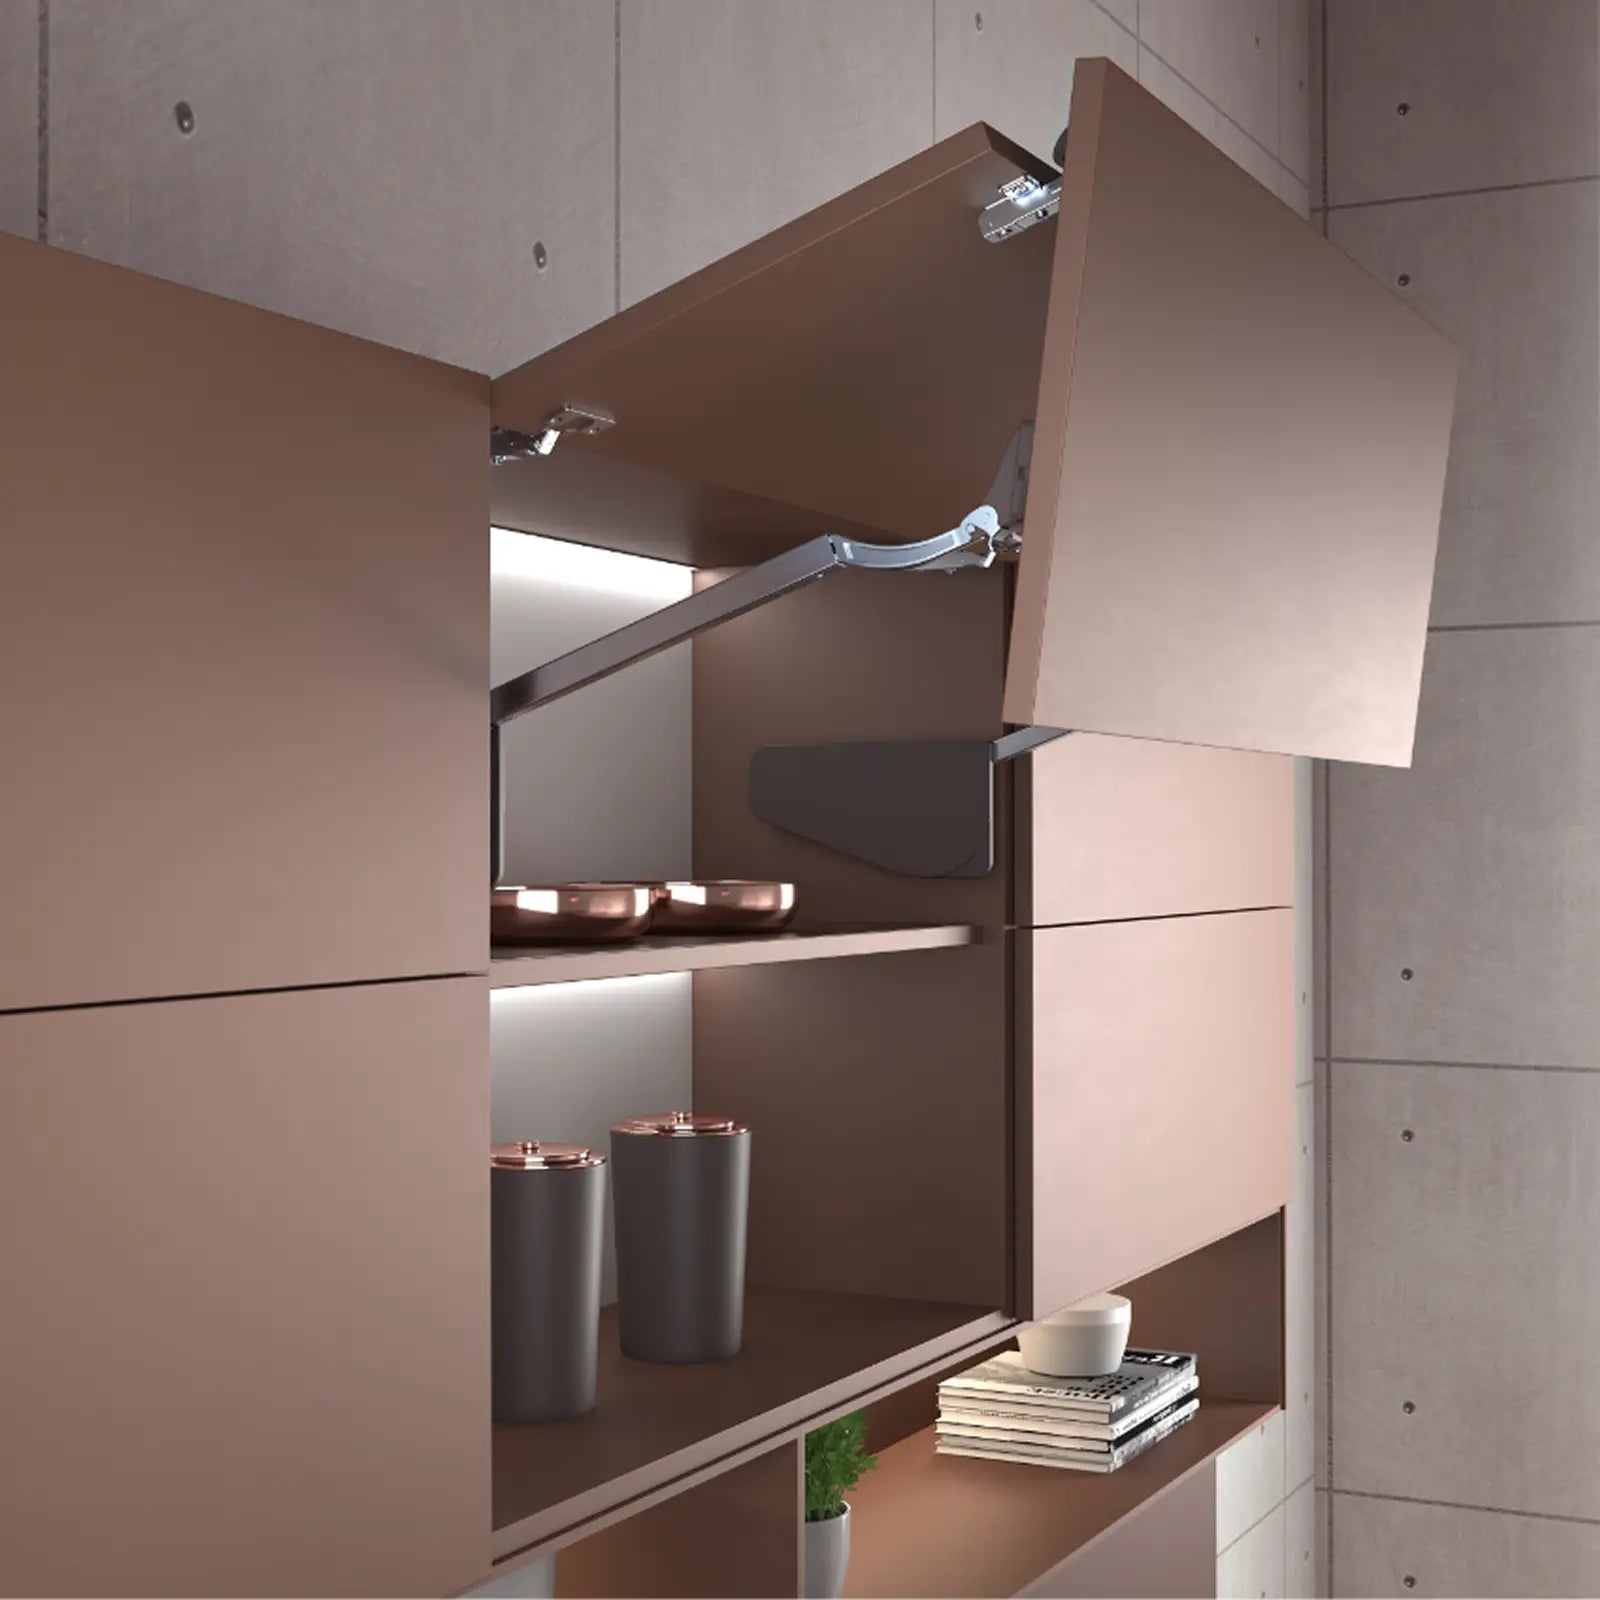 MultiMech Bi-Fold Cabinet Door Lift Up Mechanism - Anthracite - Decor And Decor